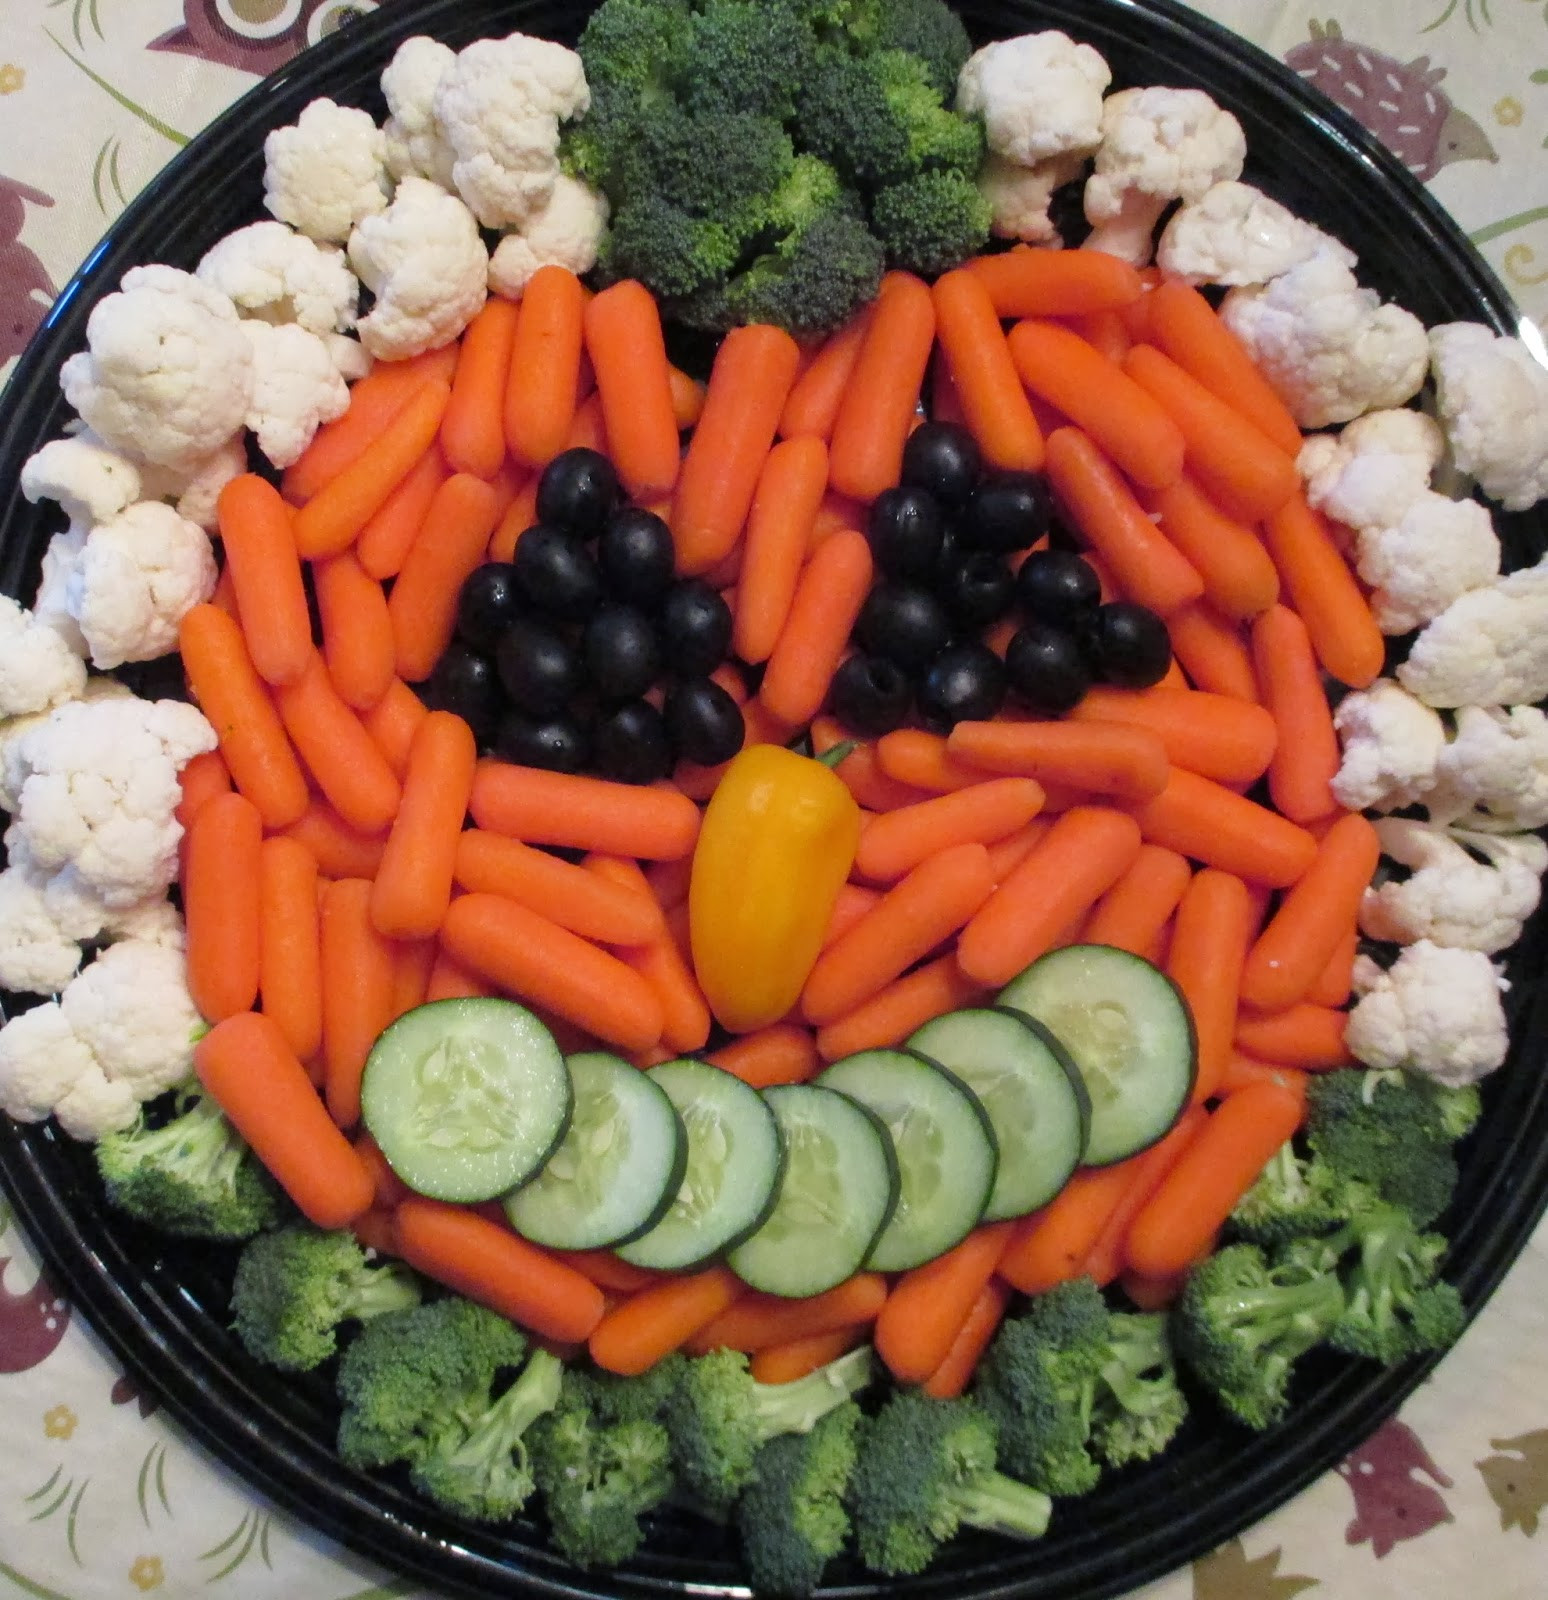 Veggie Ideas For Halloween Party
 Raising Jack With Celiac Gluten Free Fall Party